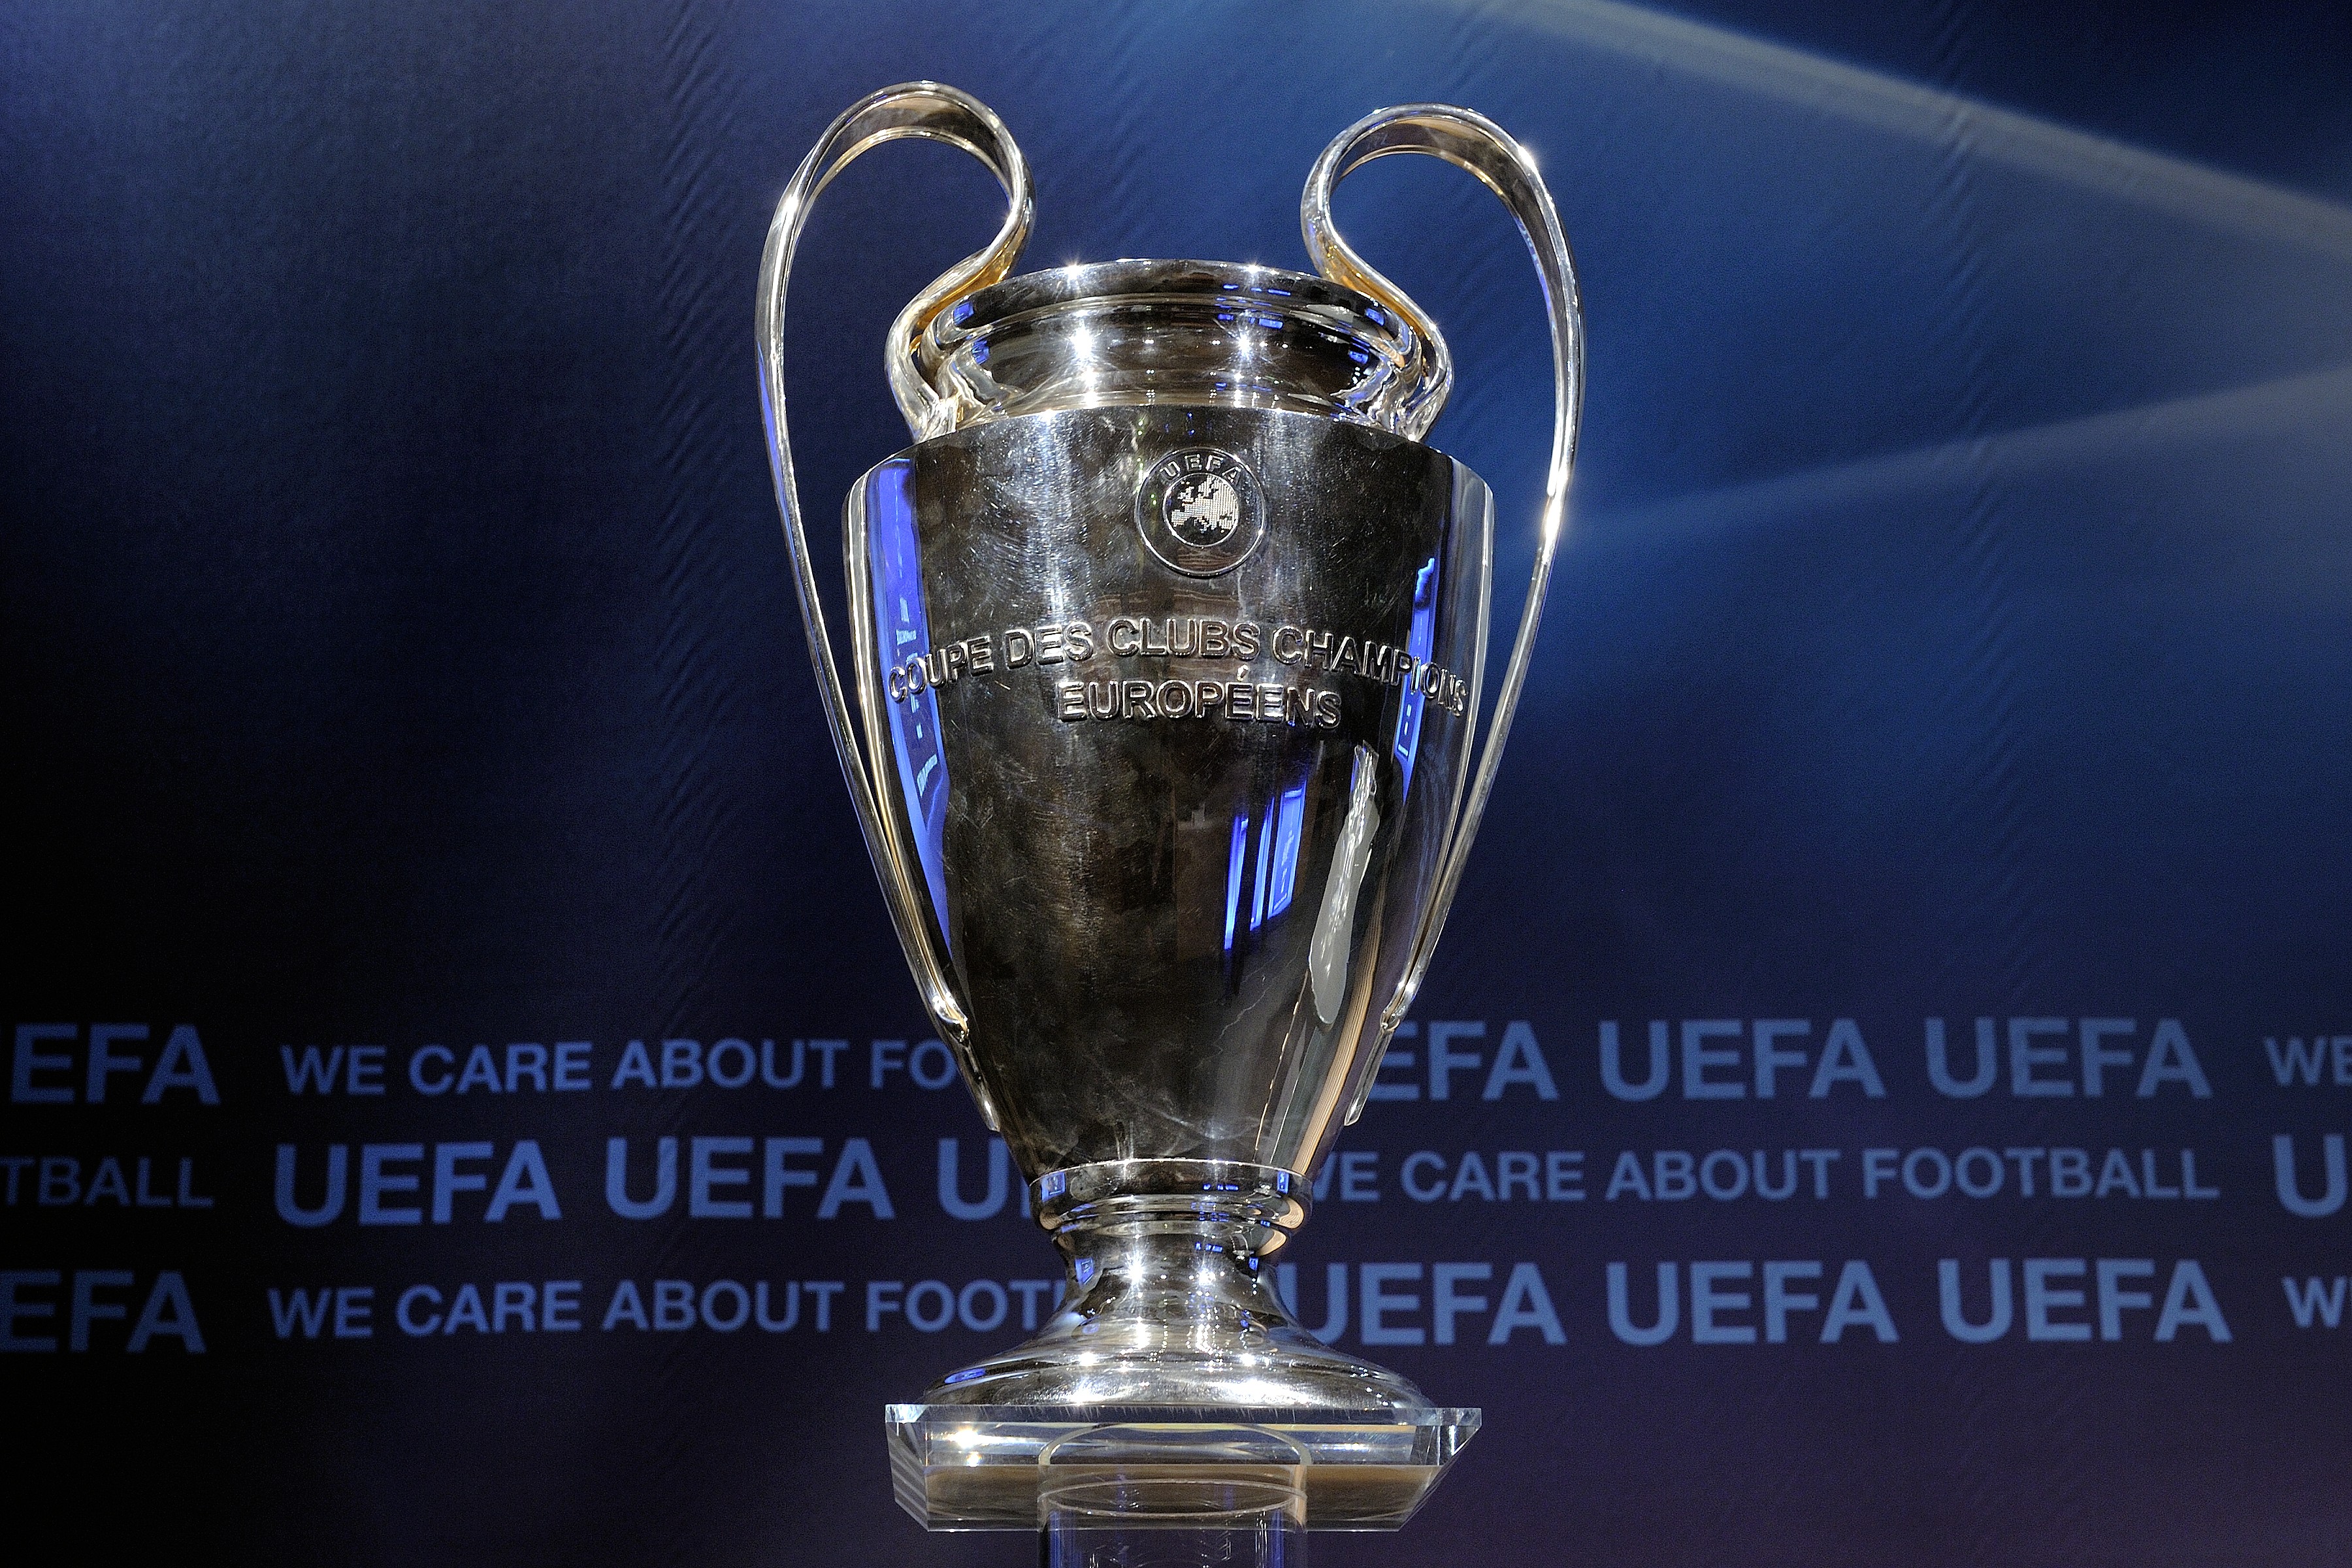 The Champions League Trophy